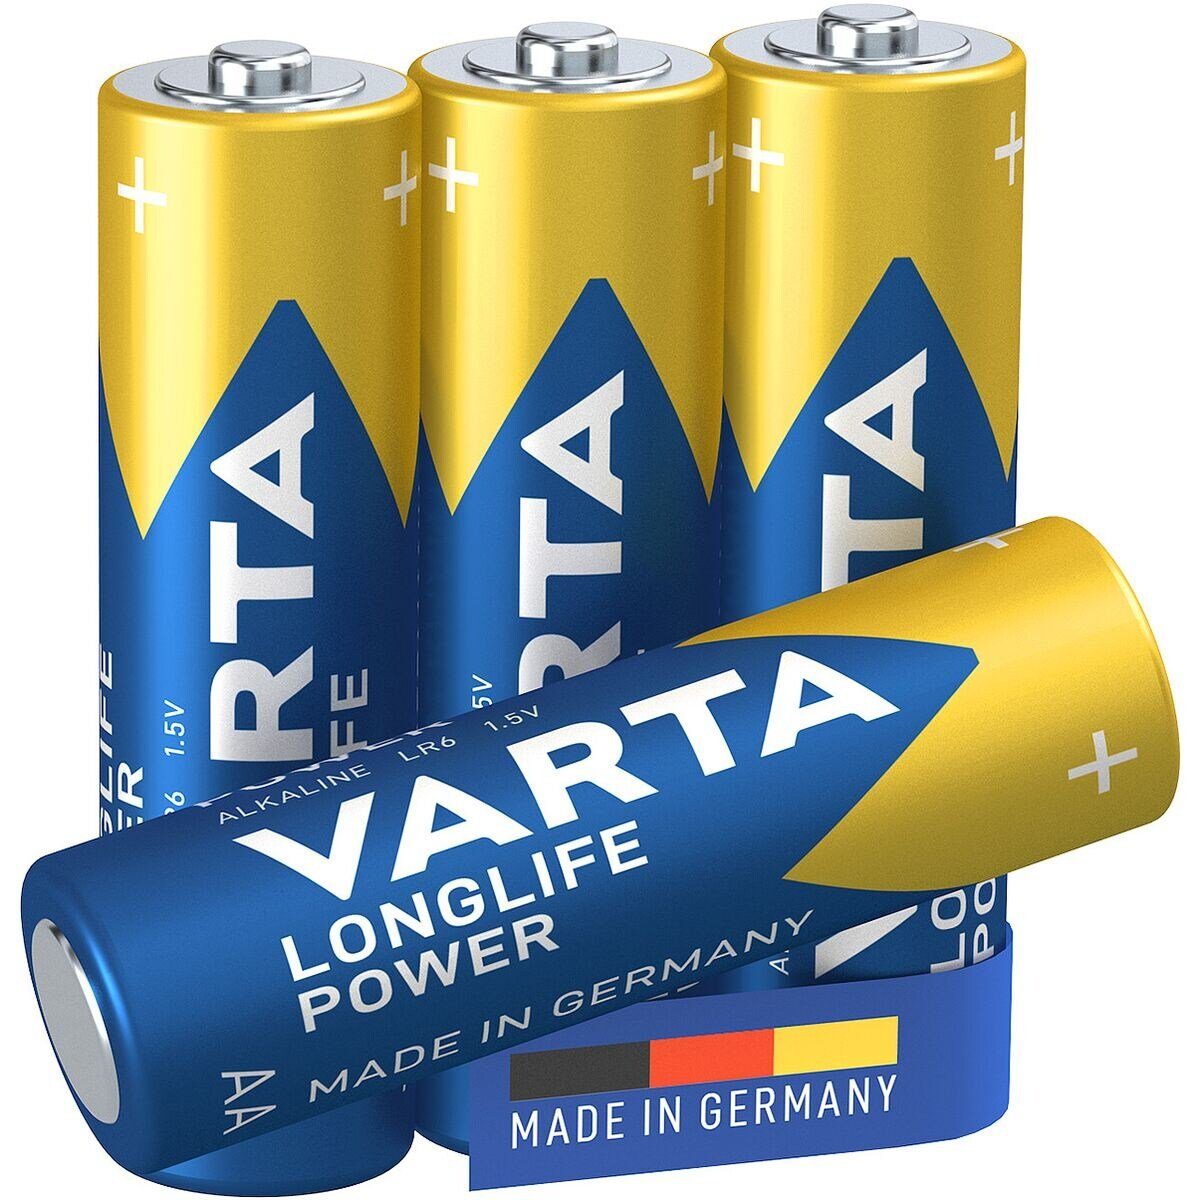 LONGLIFE Power Batterie, St), (4 langer mit AA, Lebensdauer VARTA